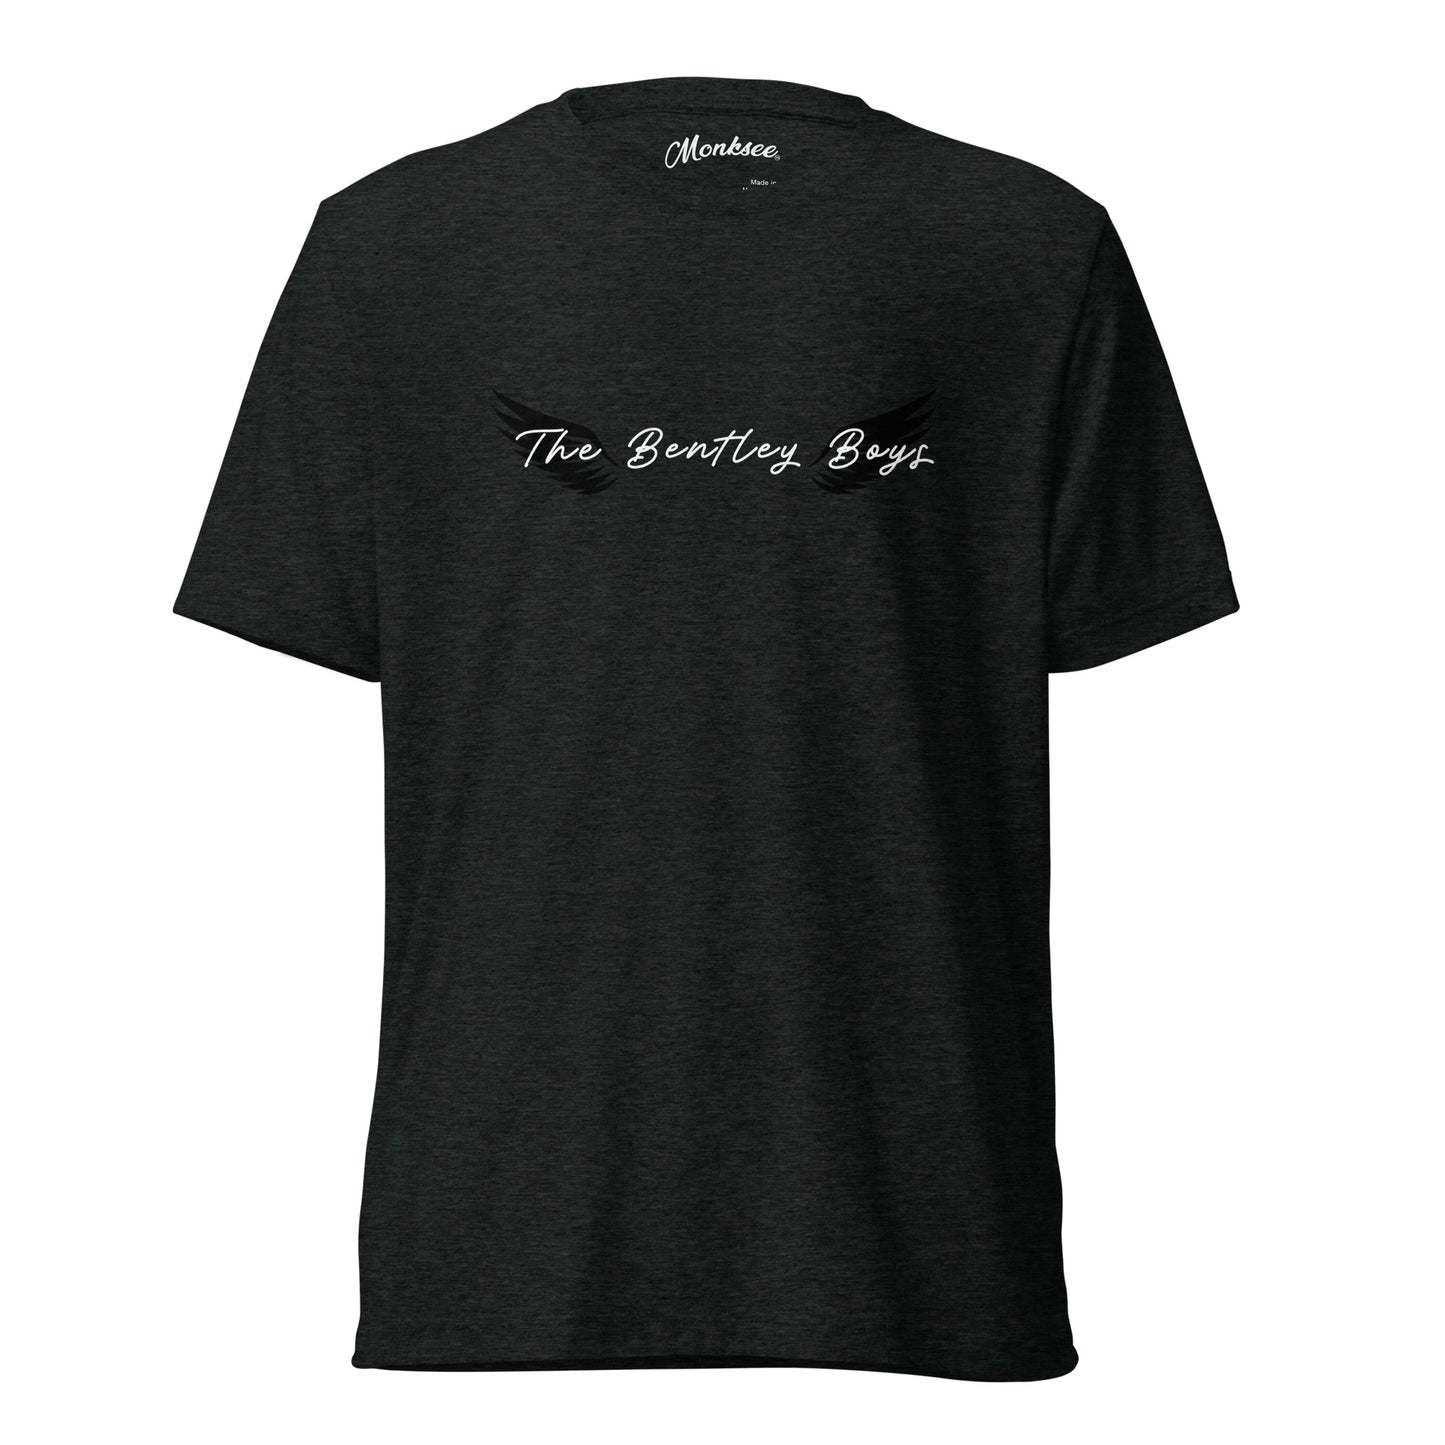 Bentley Boys2 t-shirt.